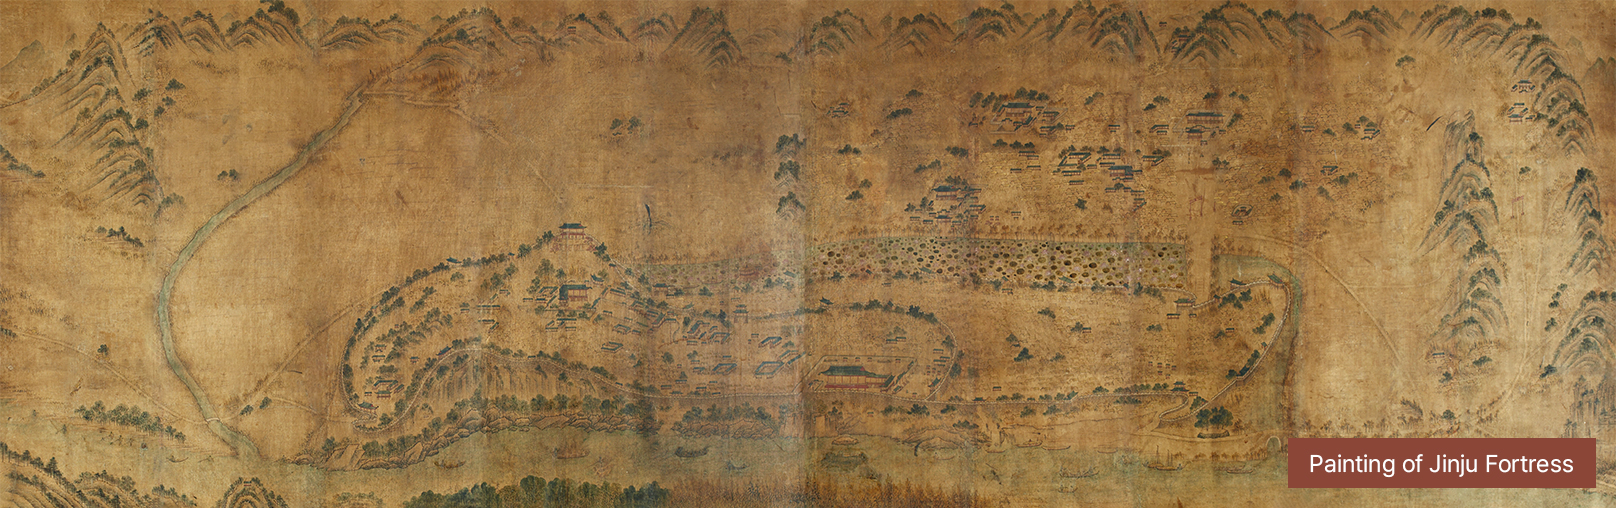 Painting of Jinju Fortress